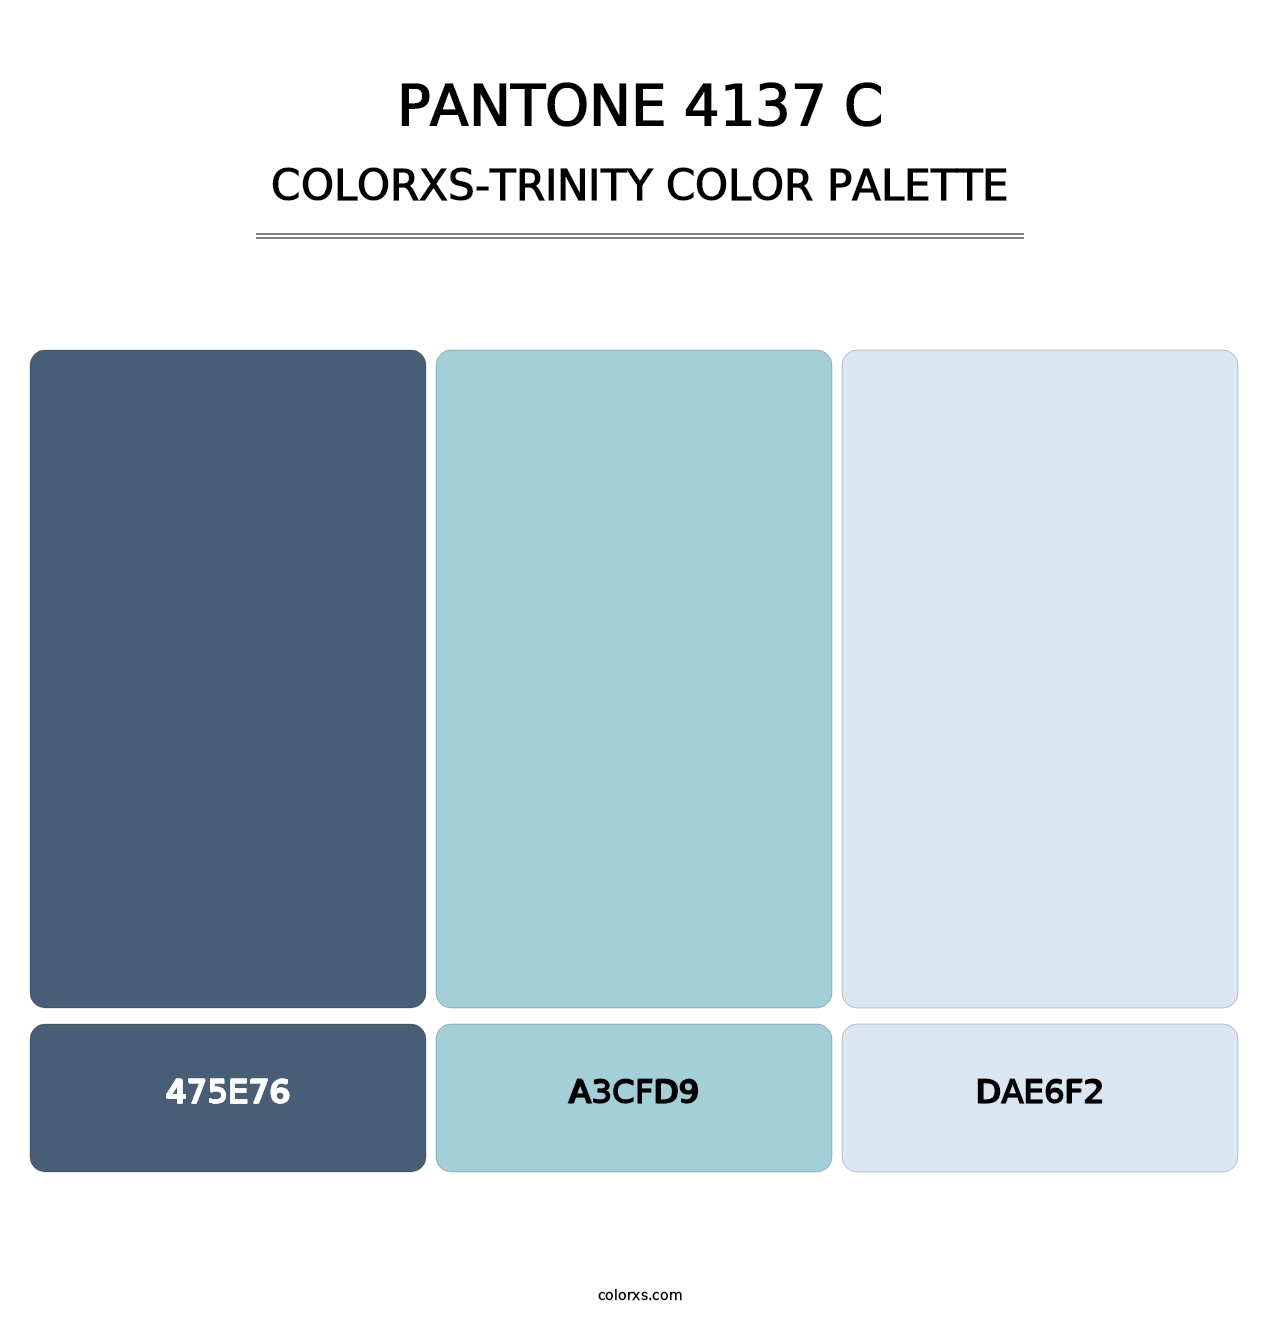 PANTONE 4137 C - Colorxs Trinity Palette